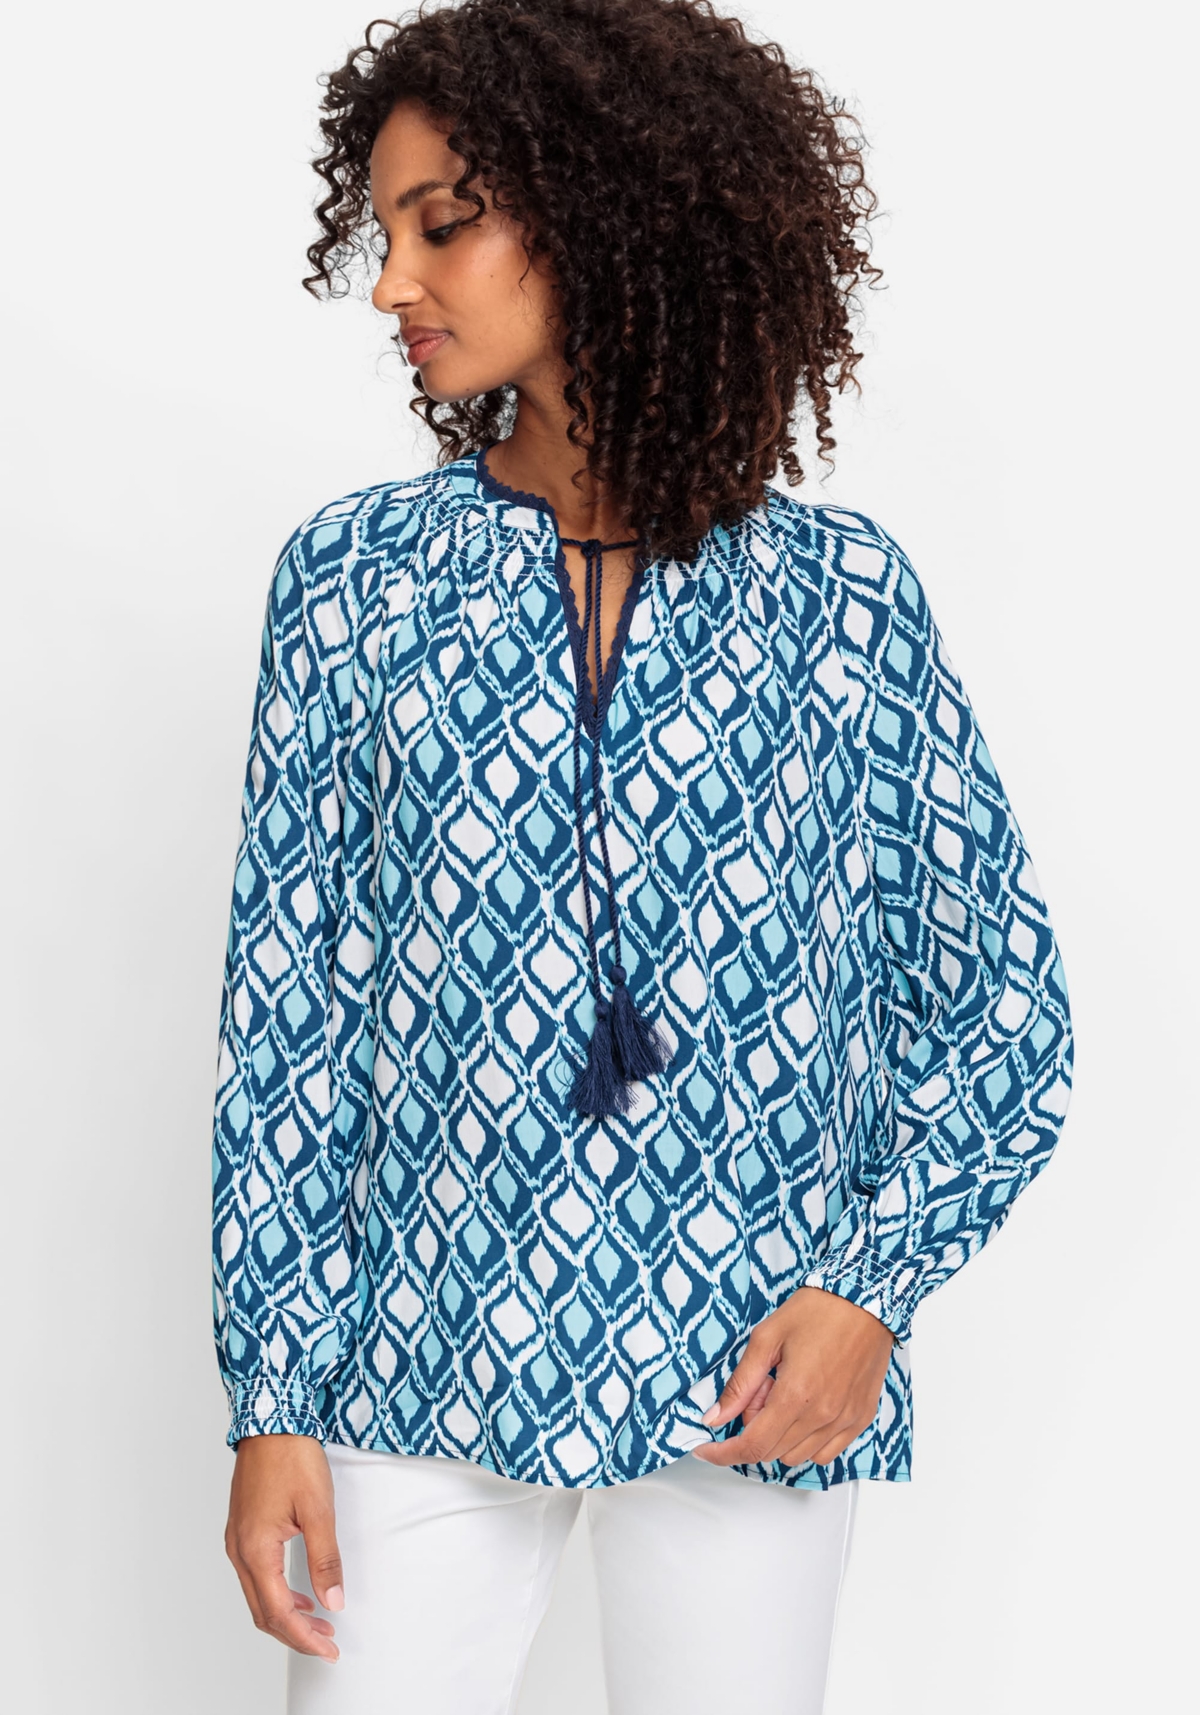 Women's Long Sleeve Ikat Print Tunic Blouse - Light turquoise